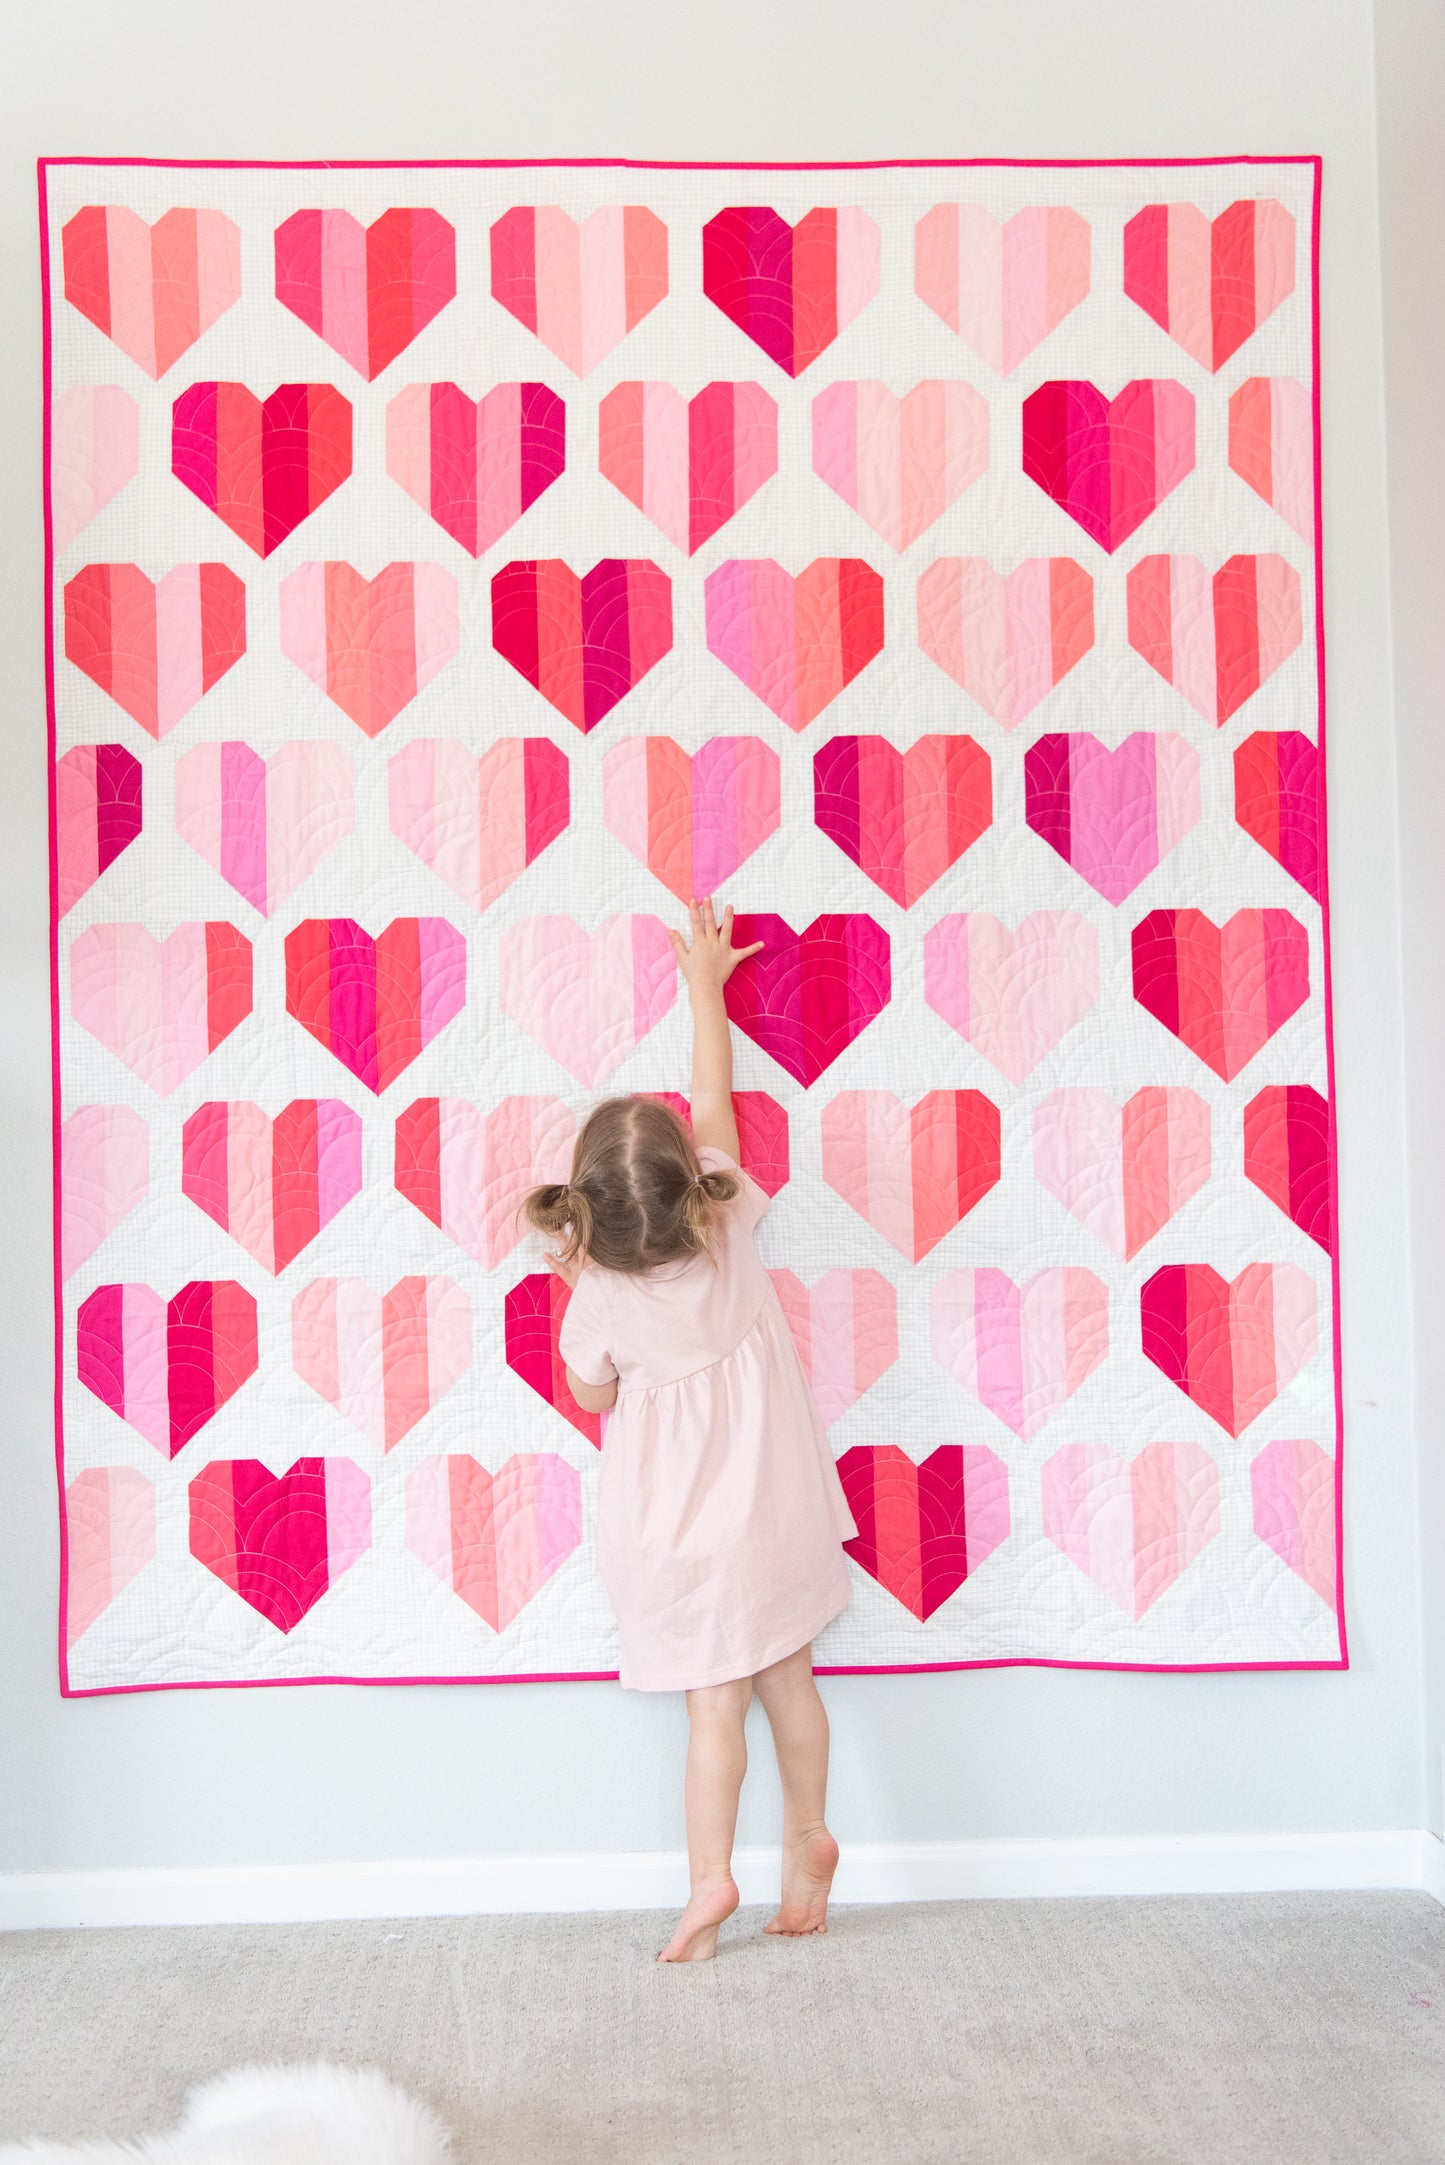 Infinite Hearts PAPER Quilt Pattern